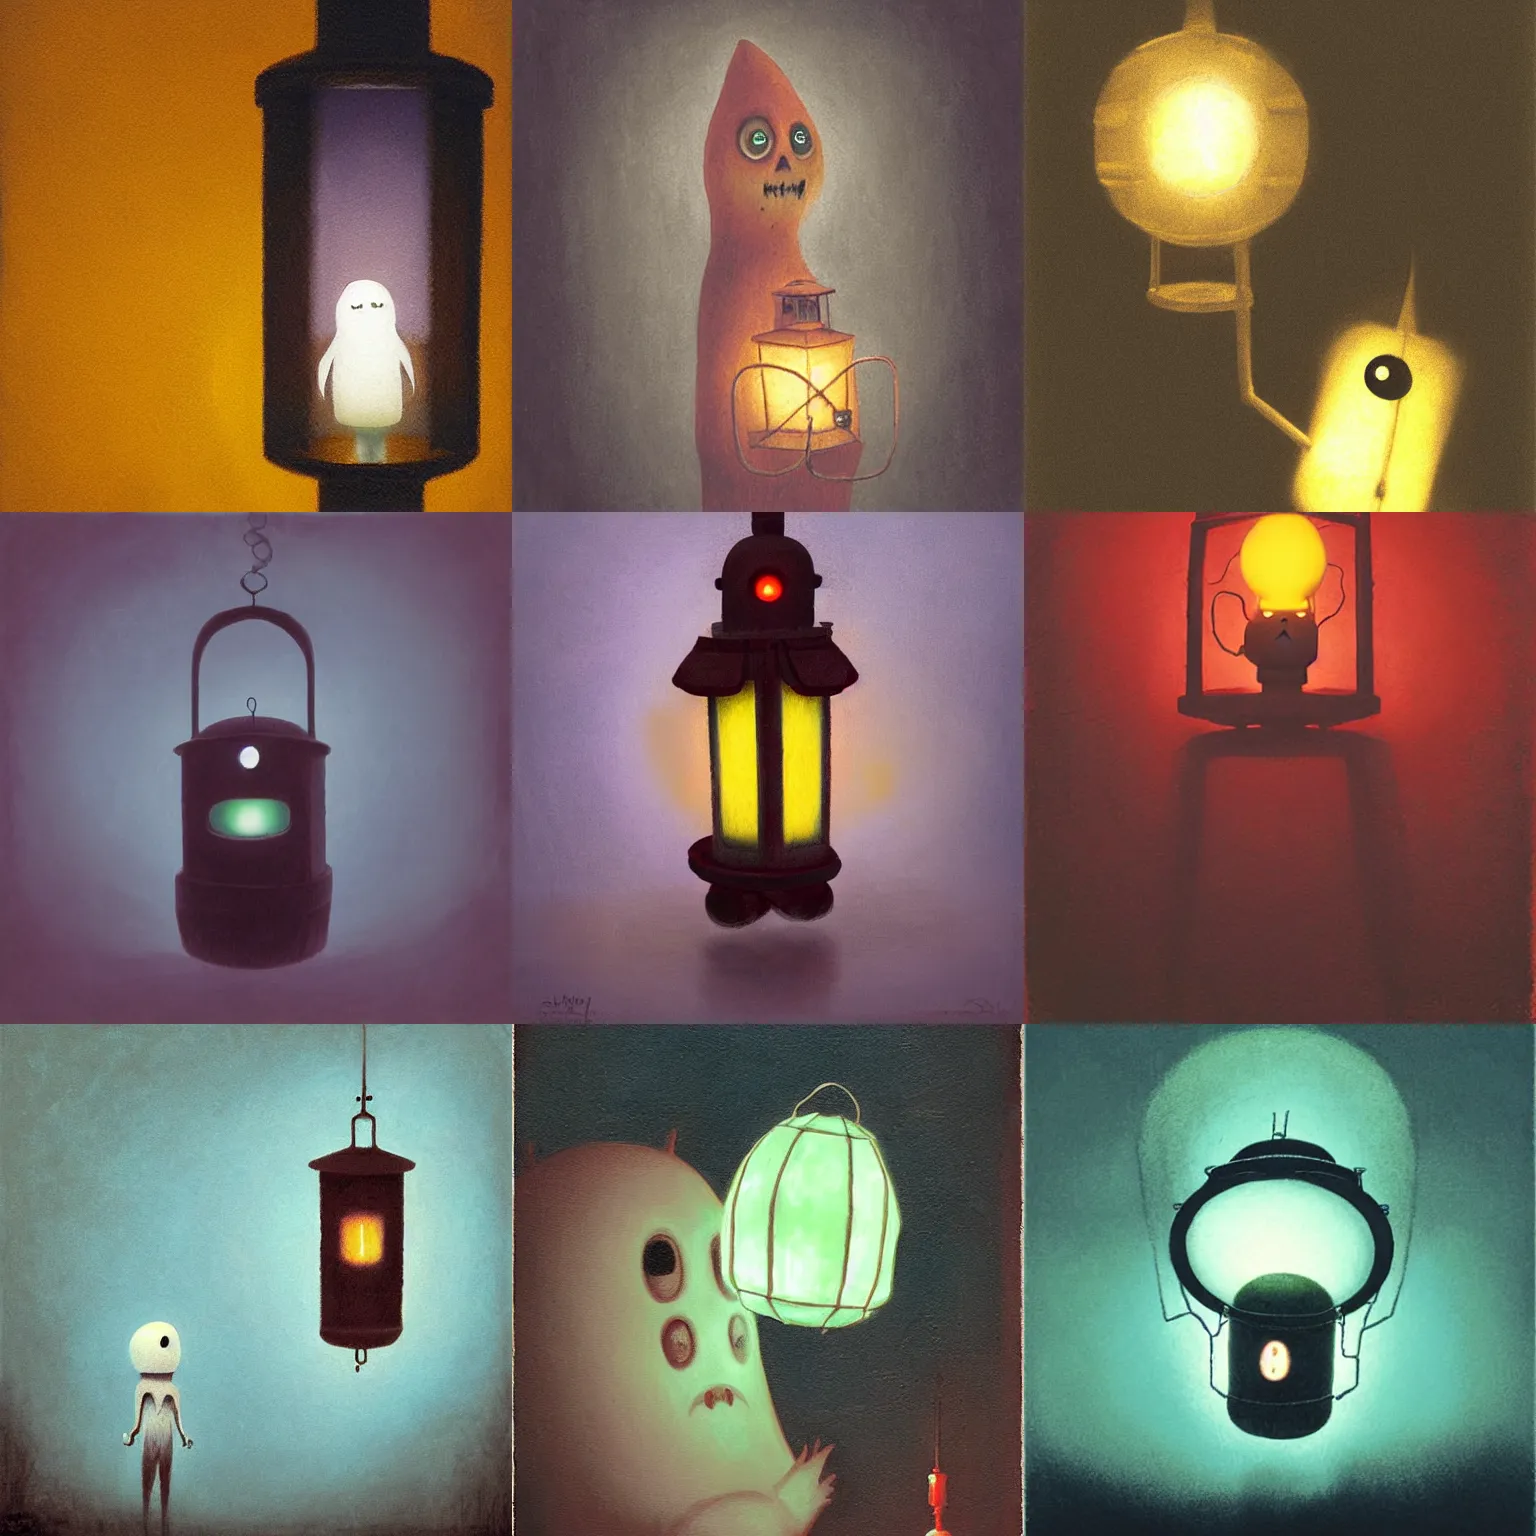 Prompt: horrifying lantern ghost by Shaun Tan